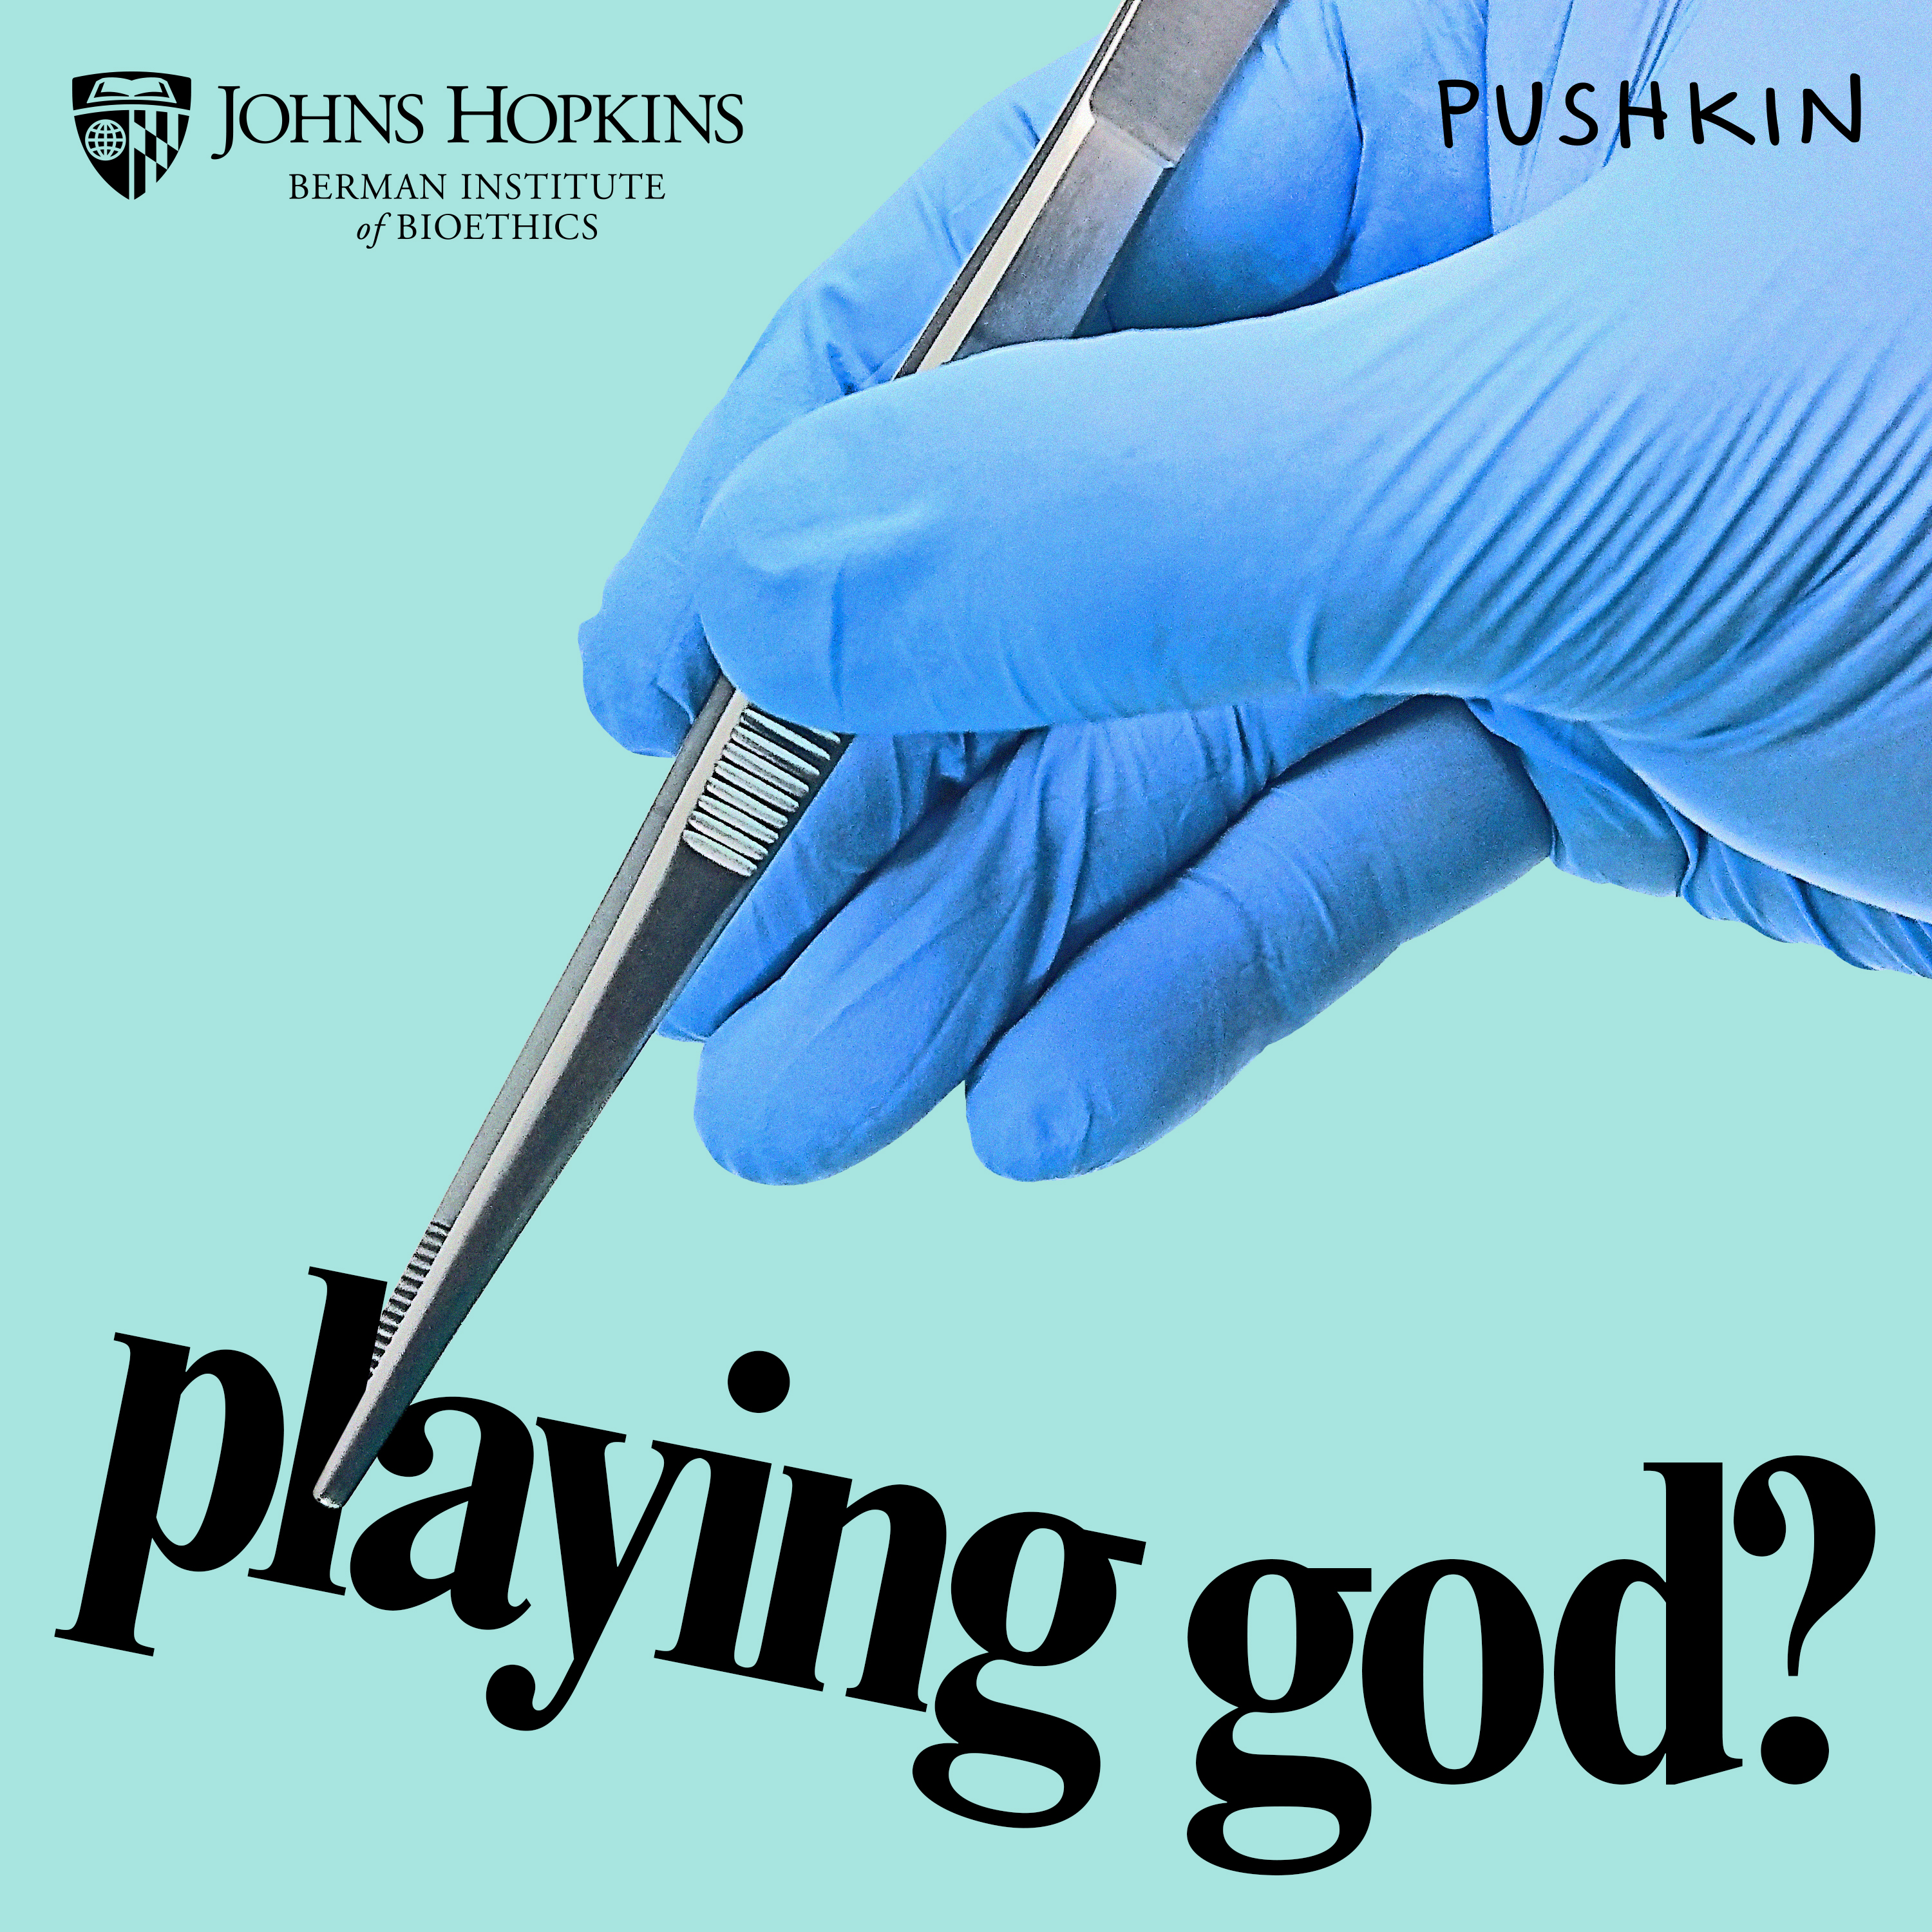 Introducing: playing god?